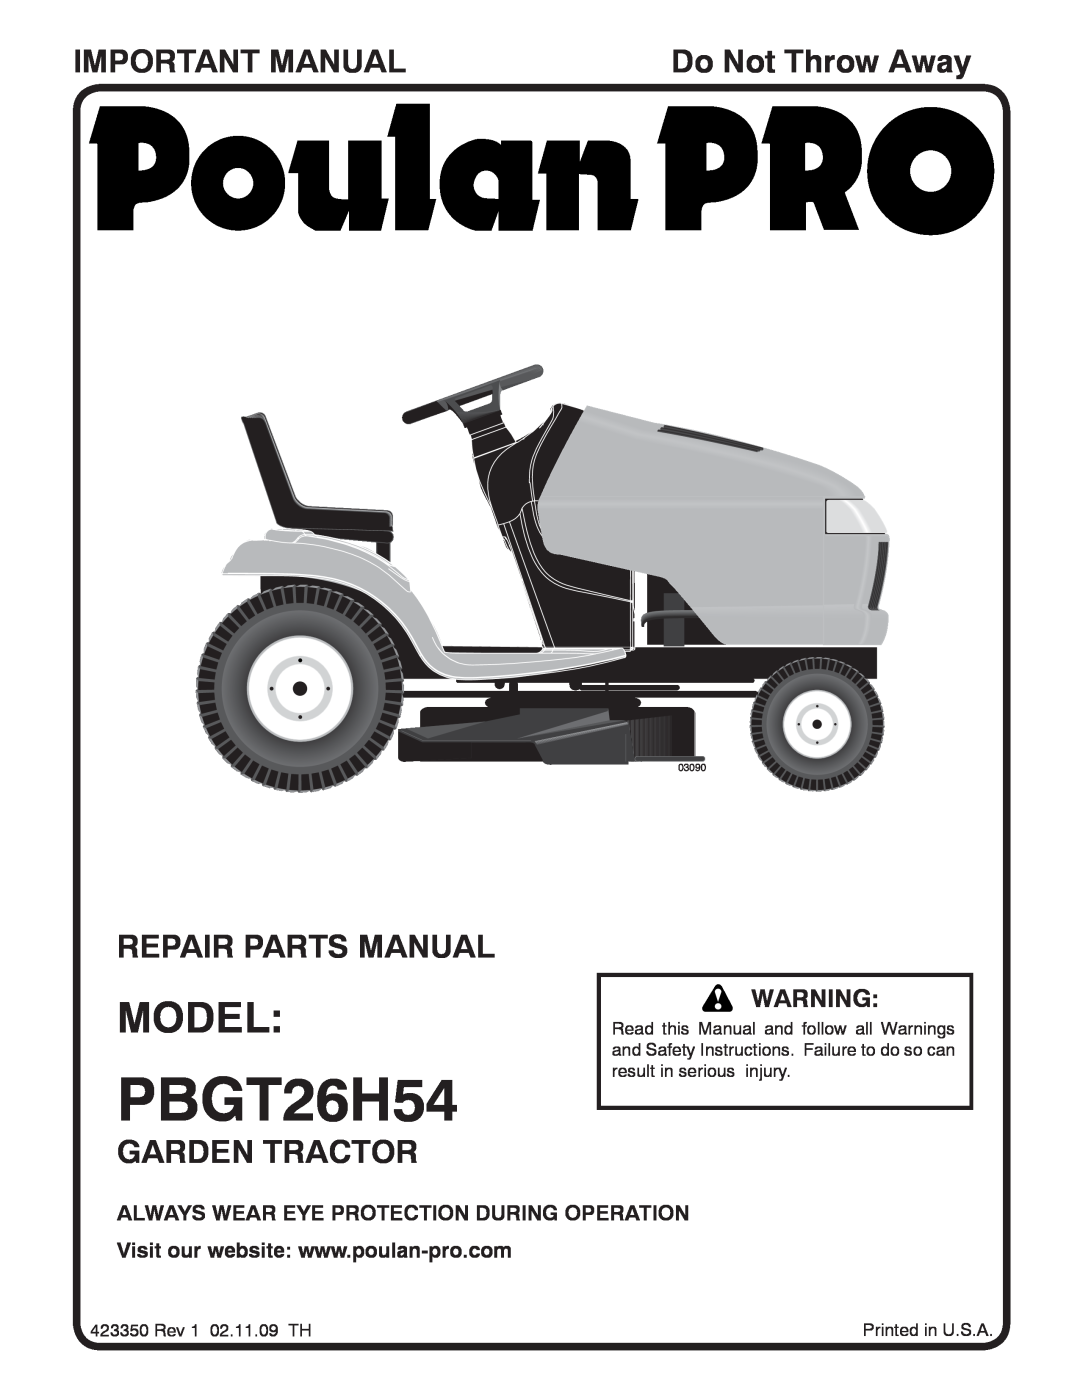 Poulan PBGT26H54 manual Model, Important Manual, Operators Manual, Lawn Tractor, Do Not Throw Away, 03090 